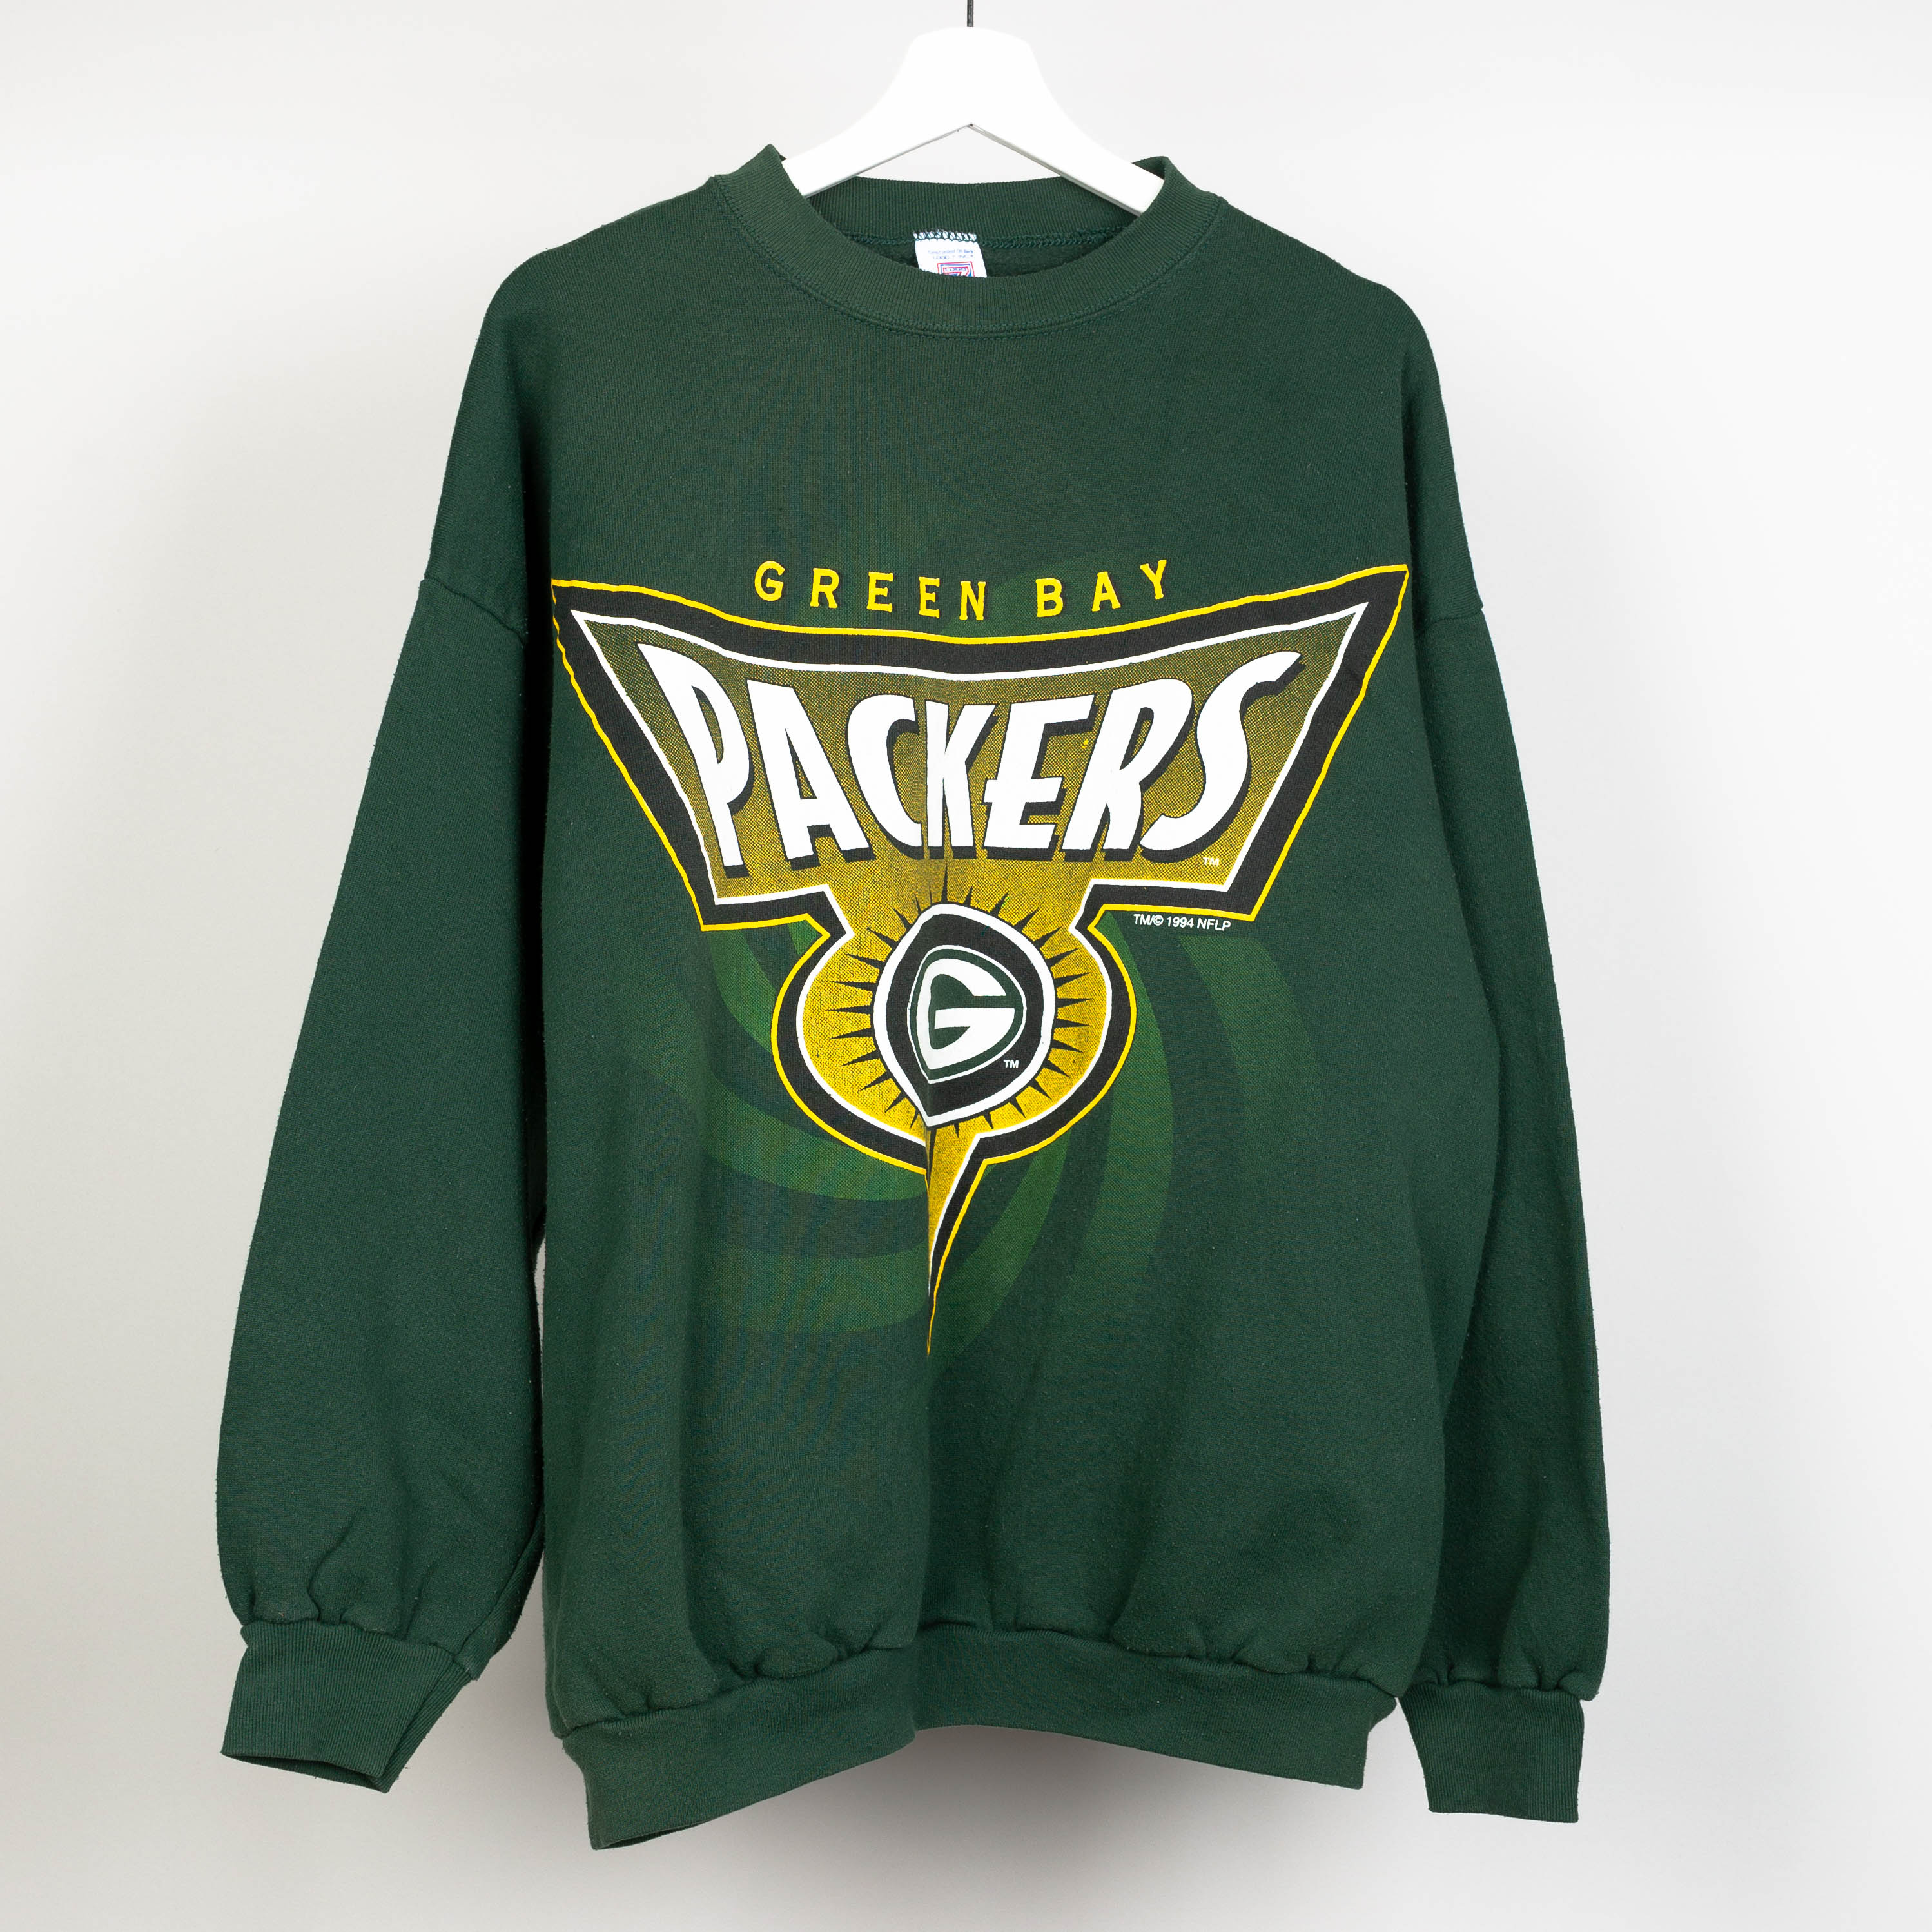 1994 Green Bay Packers Crewneck Sweatshirt Size XL